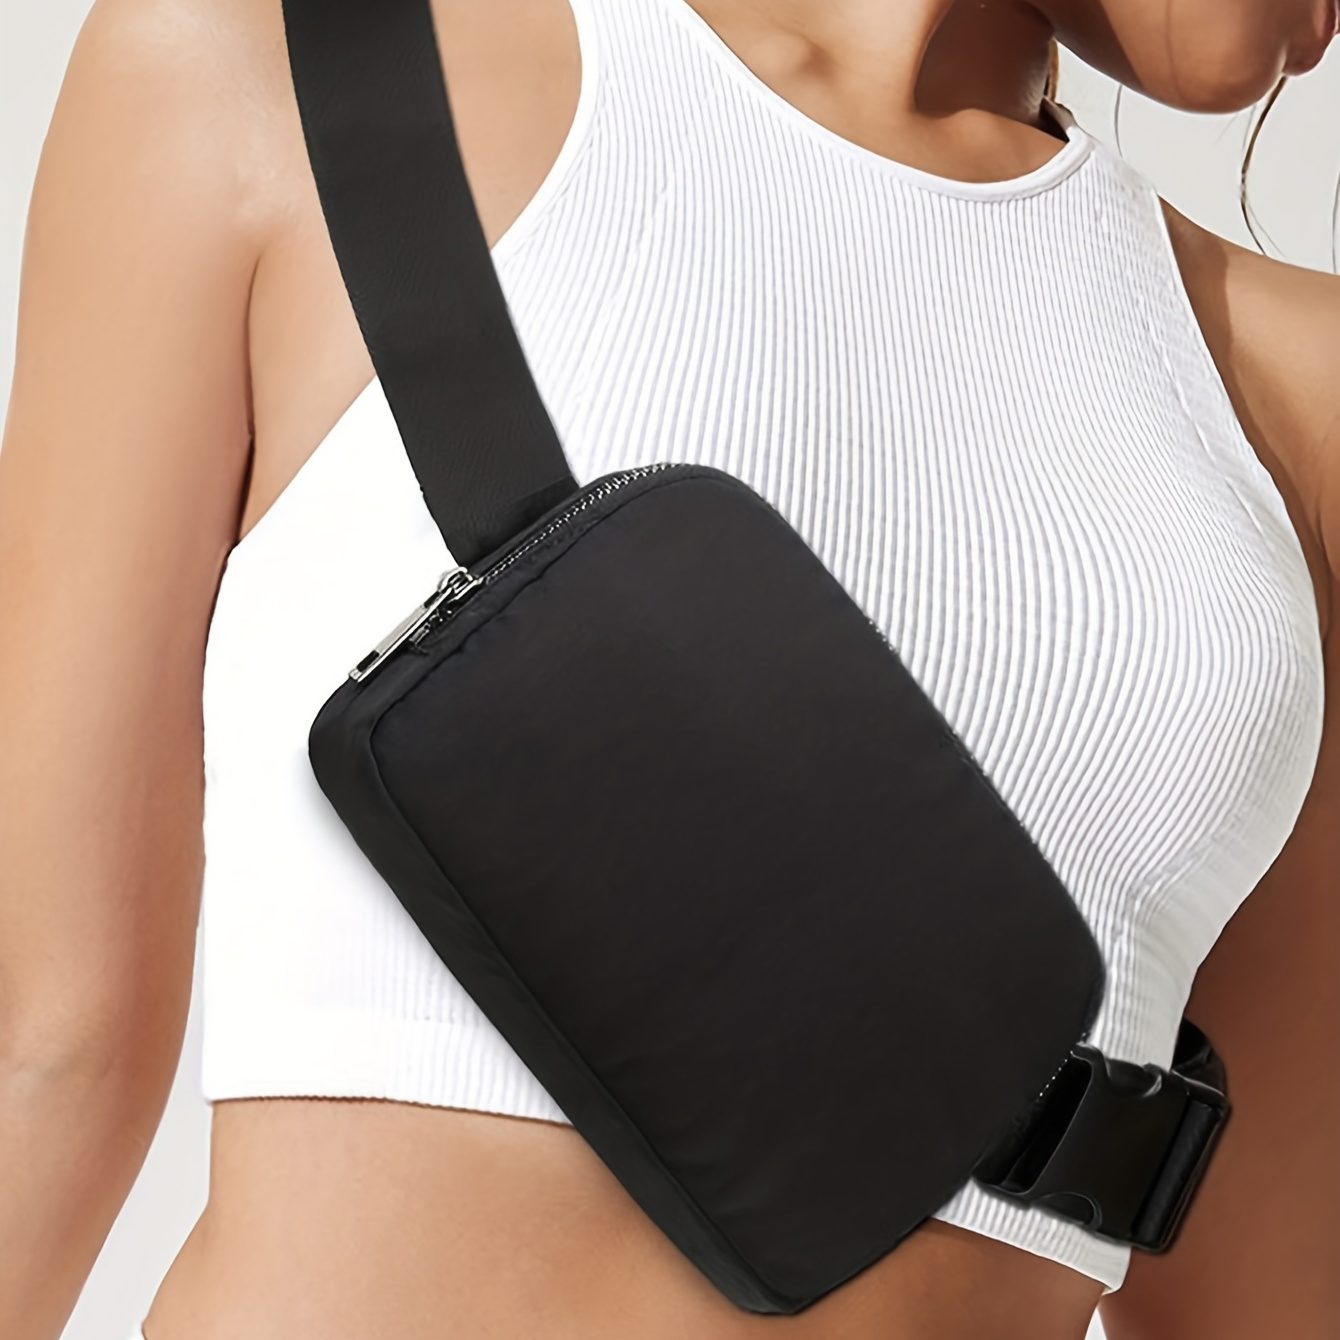  M MOTIKUL Belt Bag for Women Fashion Crossbody Fanny Packs  Causal Waist Hip Bum Bag Leather Chest Daypack Purses Travel Pouch Sling